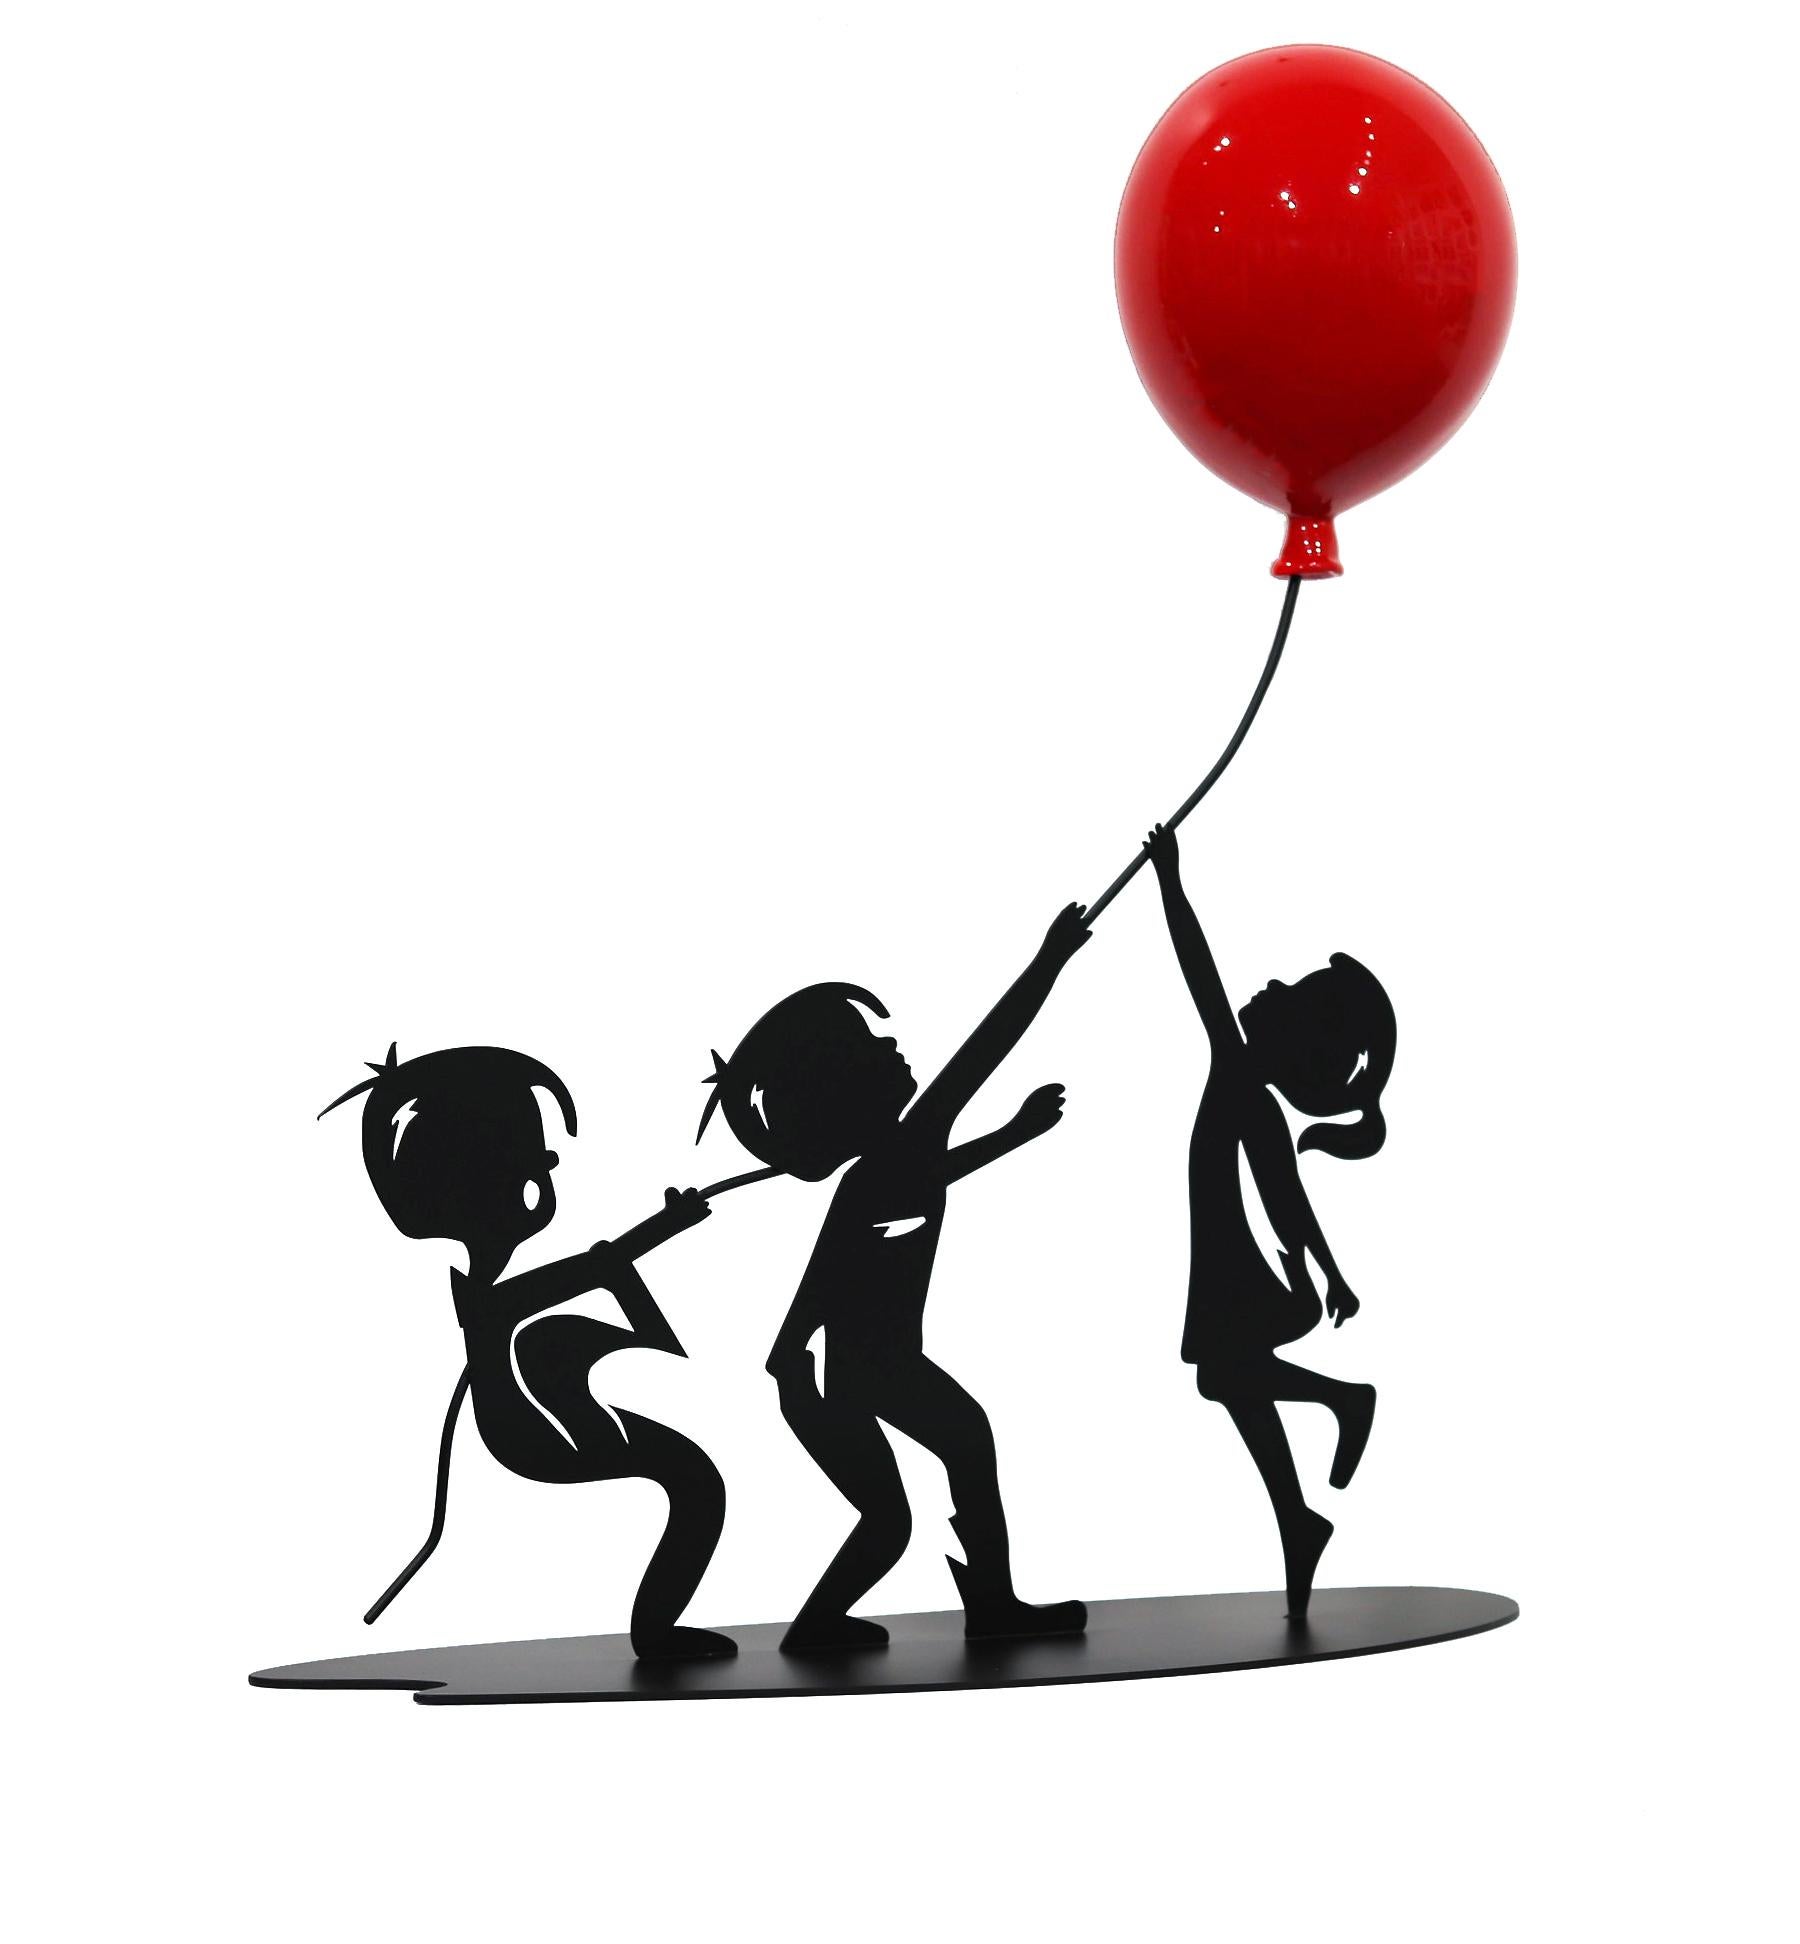 Große Träume – Figurative Stahlskulptur mit glänzendem rotem Ballon